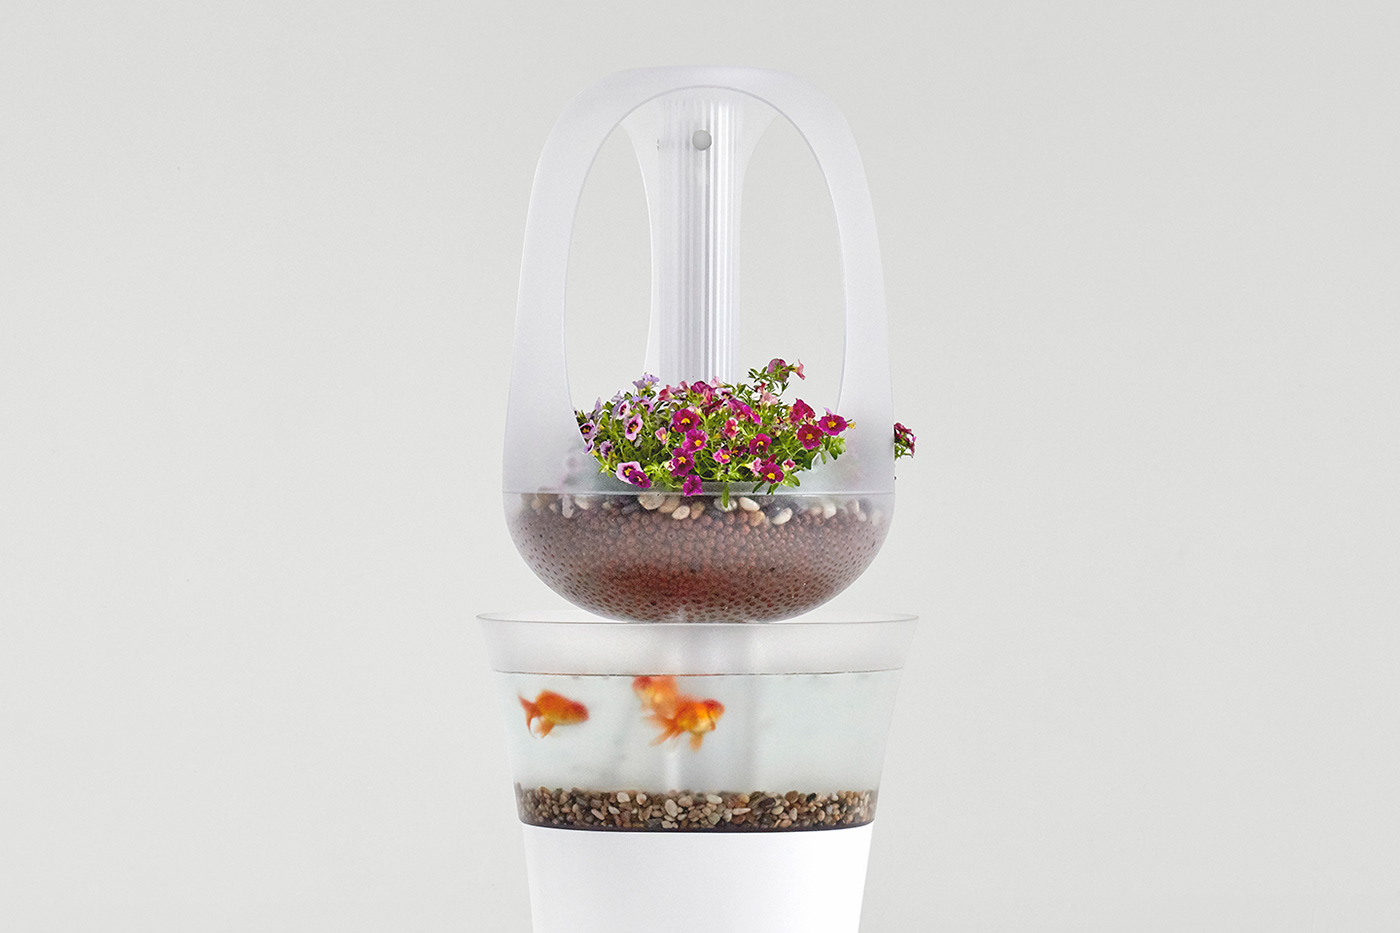 aquaponics farming fishtank Food  furniture future garden green design hydroponics IoT